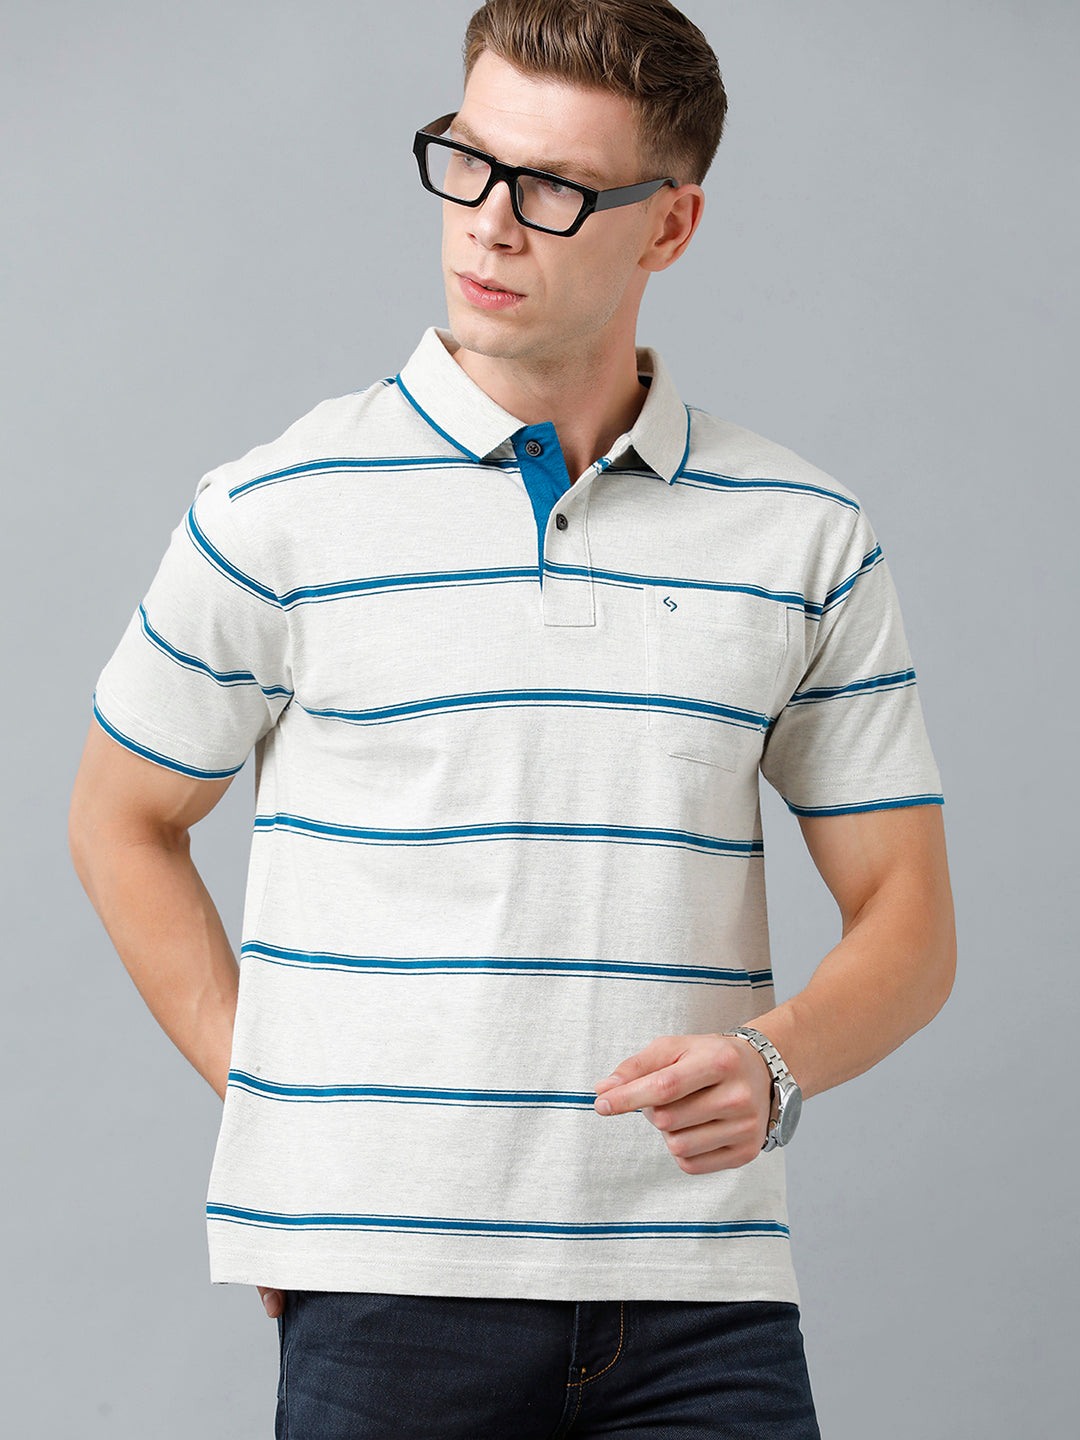 Classic Polo Men's Cotton Blend Half Sleeve Striped Authentic Fit Polo Neck White Color T-Shirt | Mel - 221 A